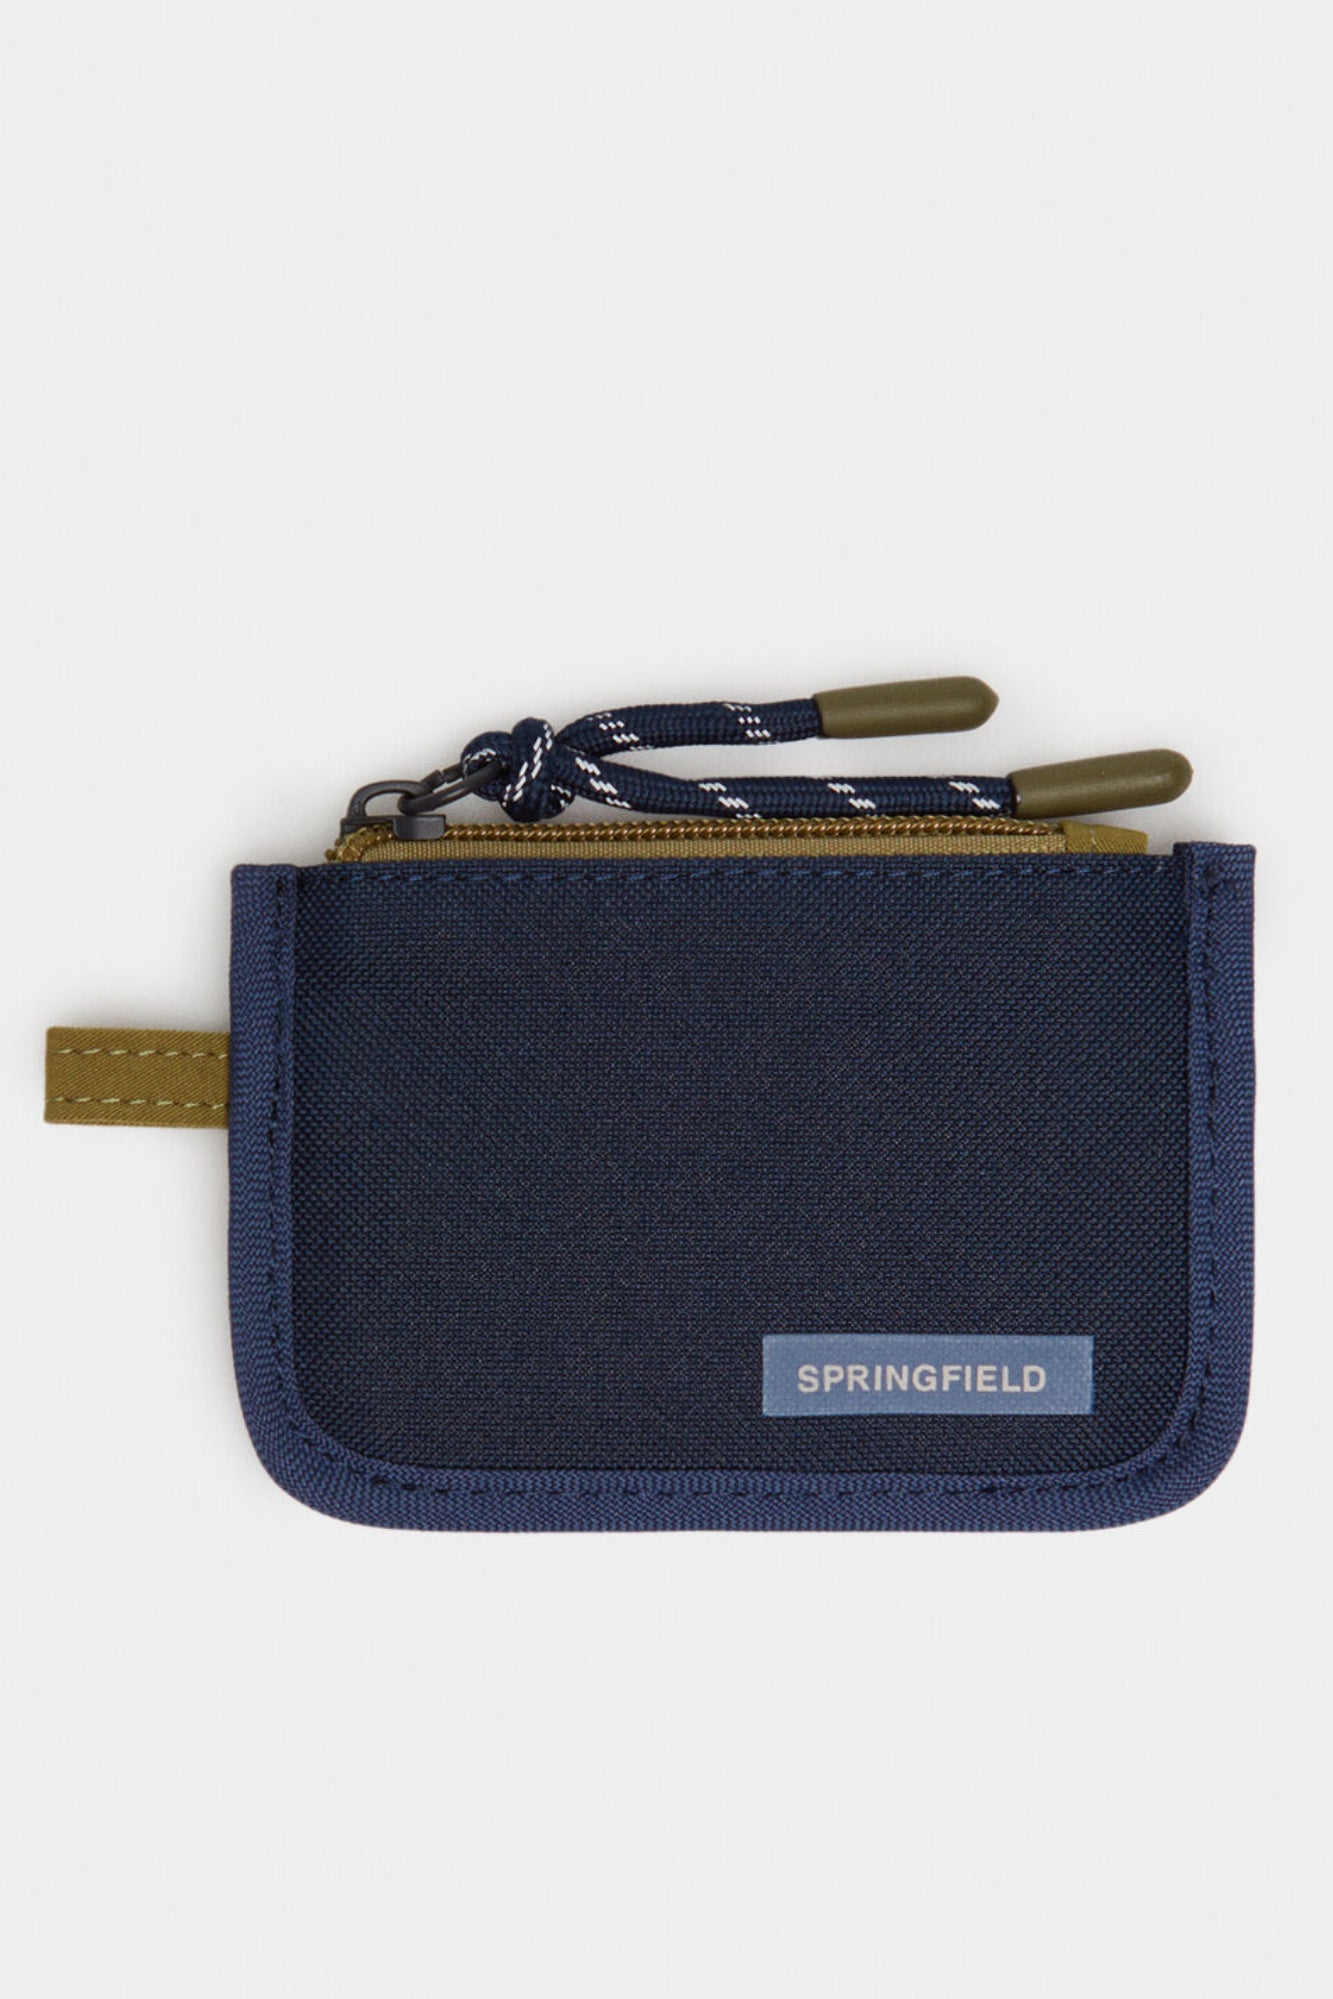 Springfield Jeans Wallet